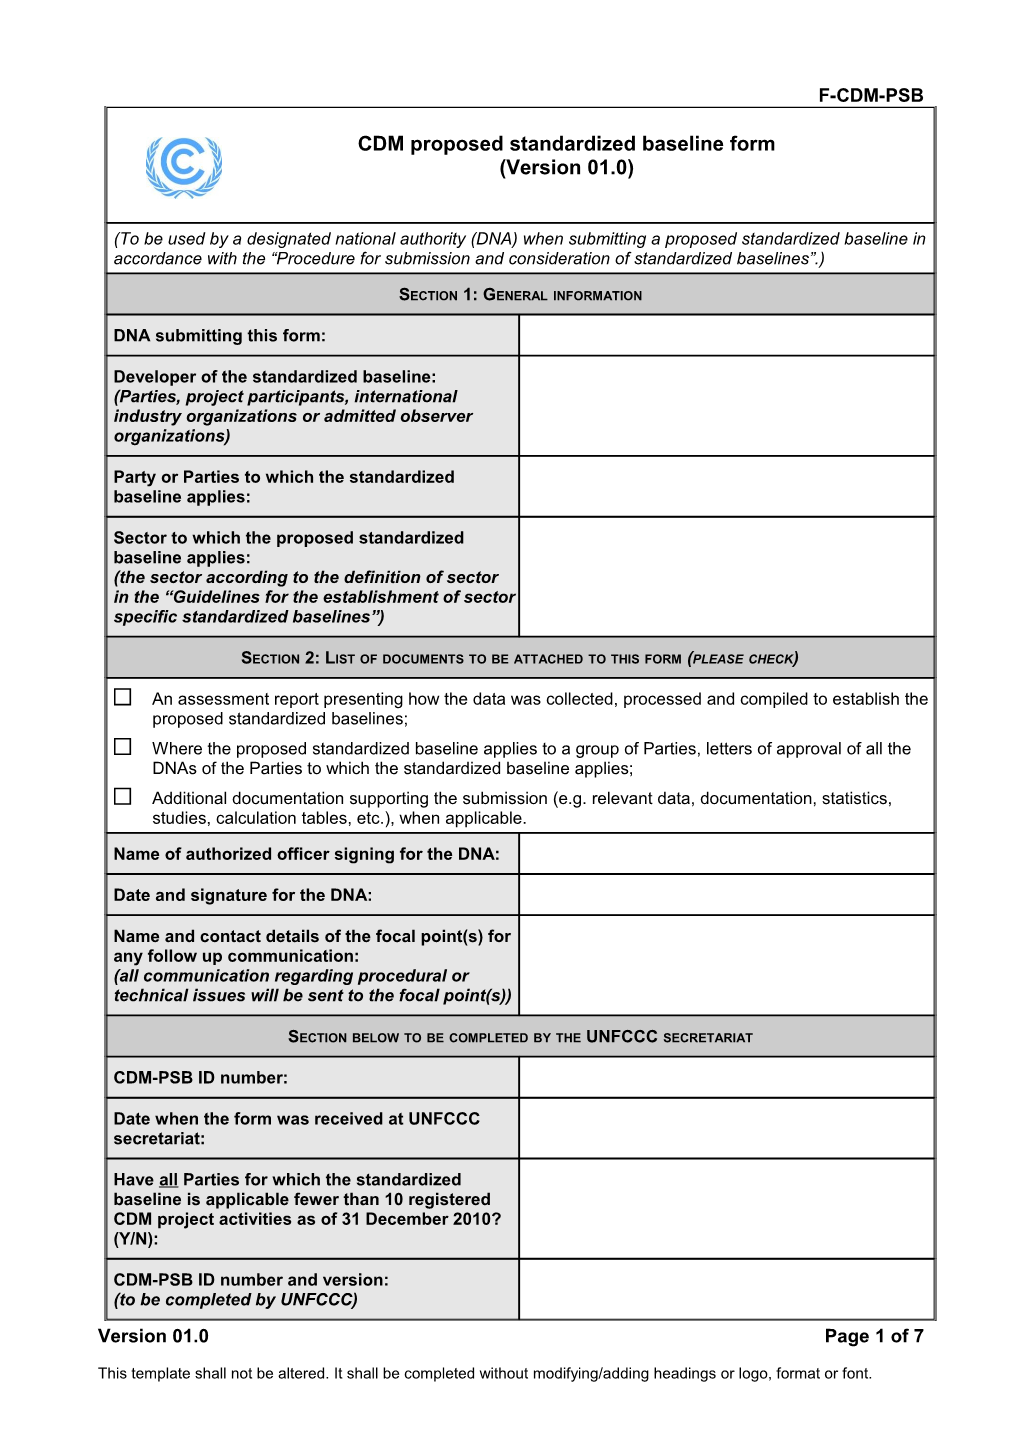 F-CDM-PSB: CDM Proposed Standardized Baseline Form. Version 01.0